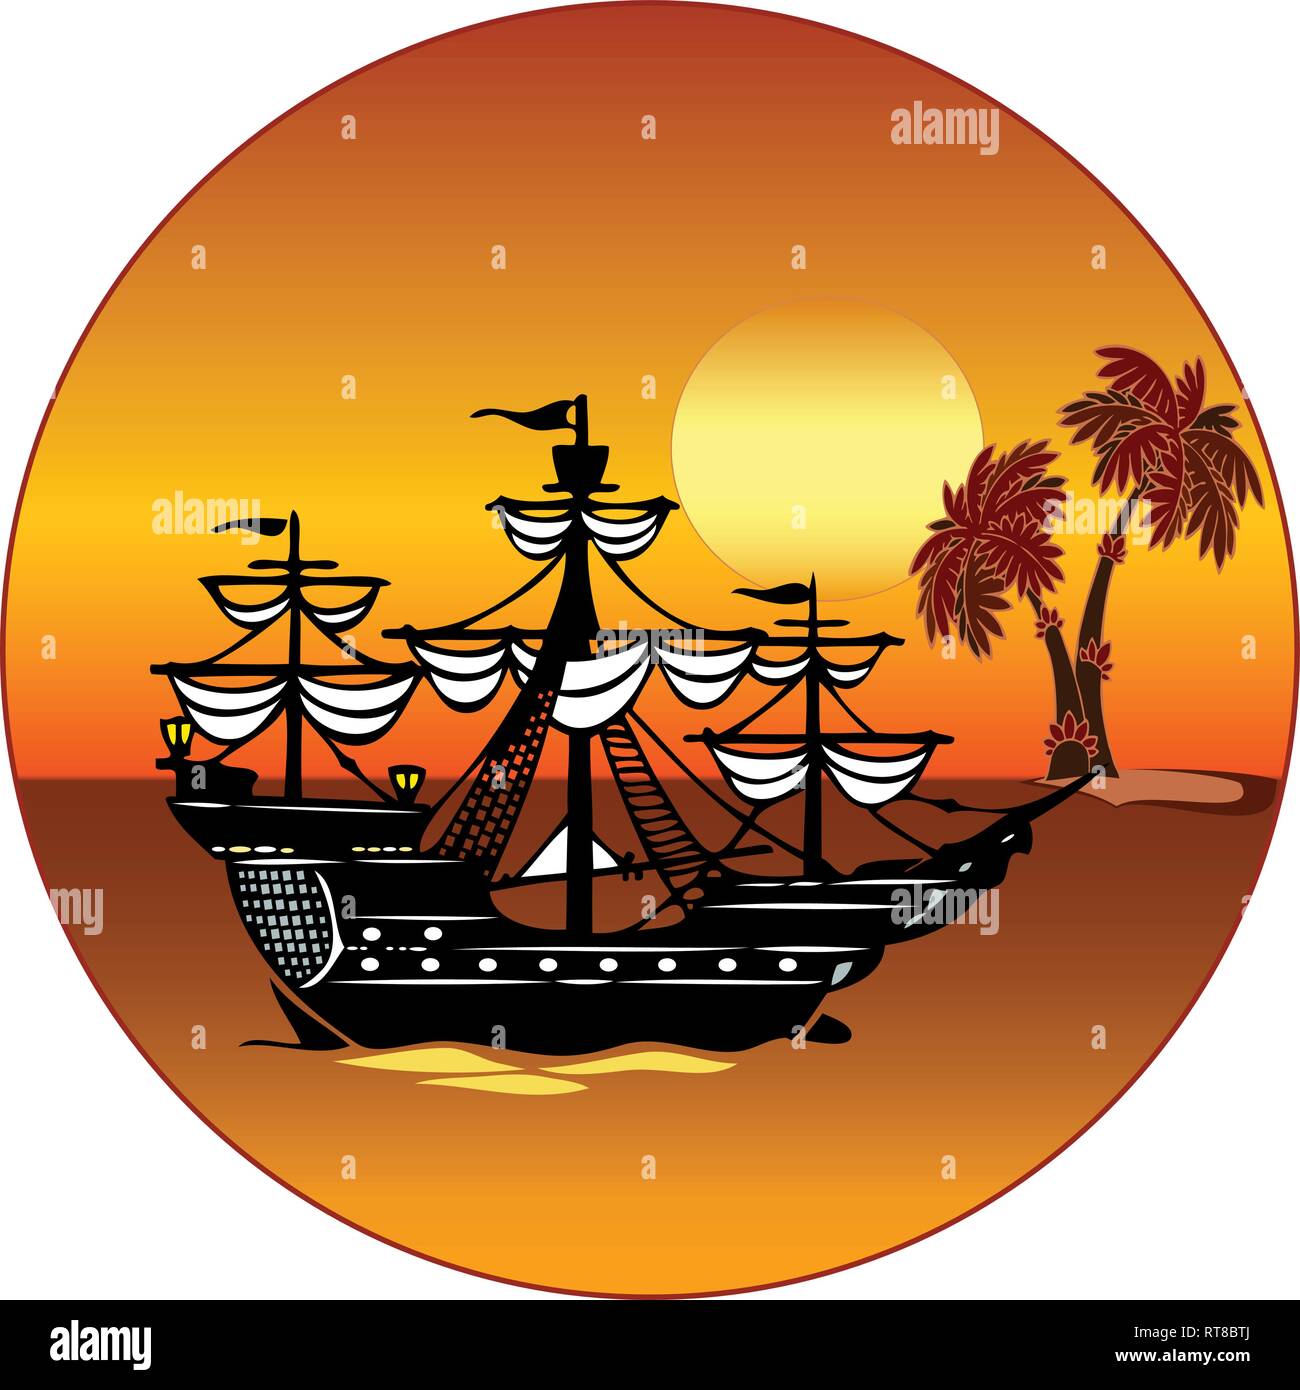 In the vector illustration, a cartoon sailing frigate walks across the sea towards an island at sunset. Stock Vector